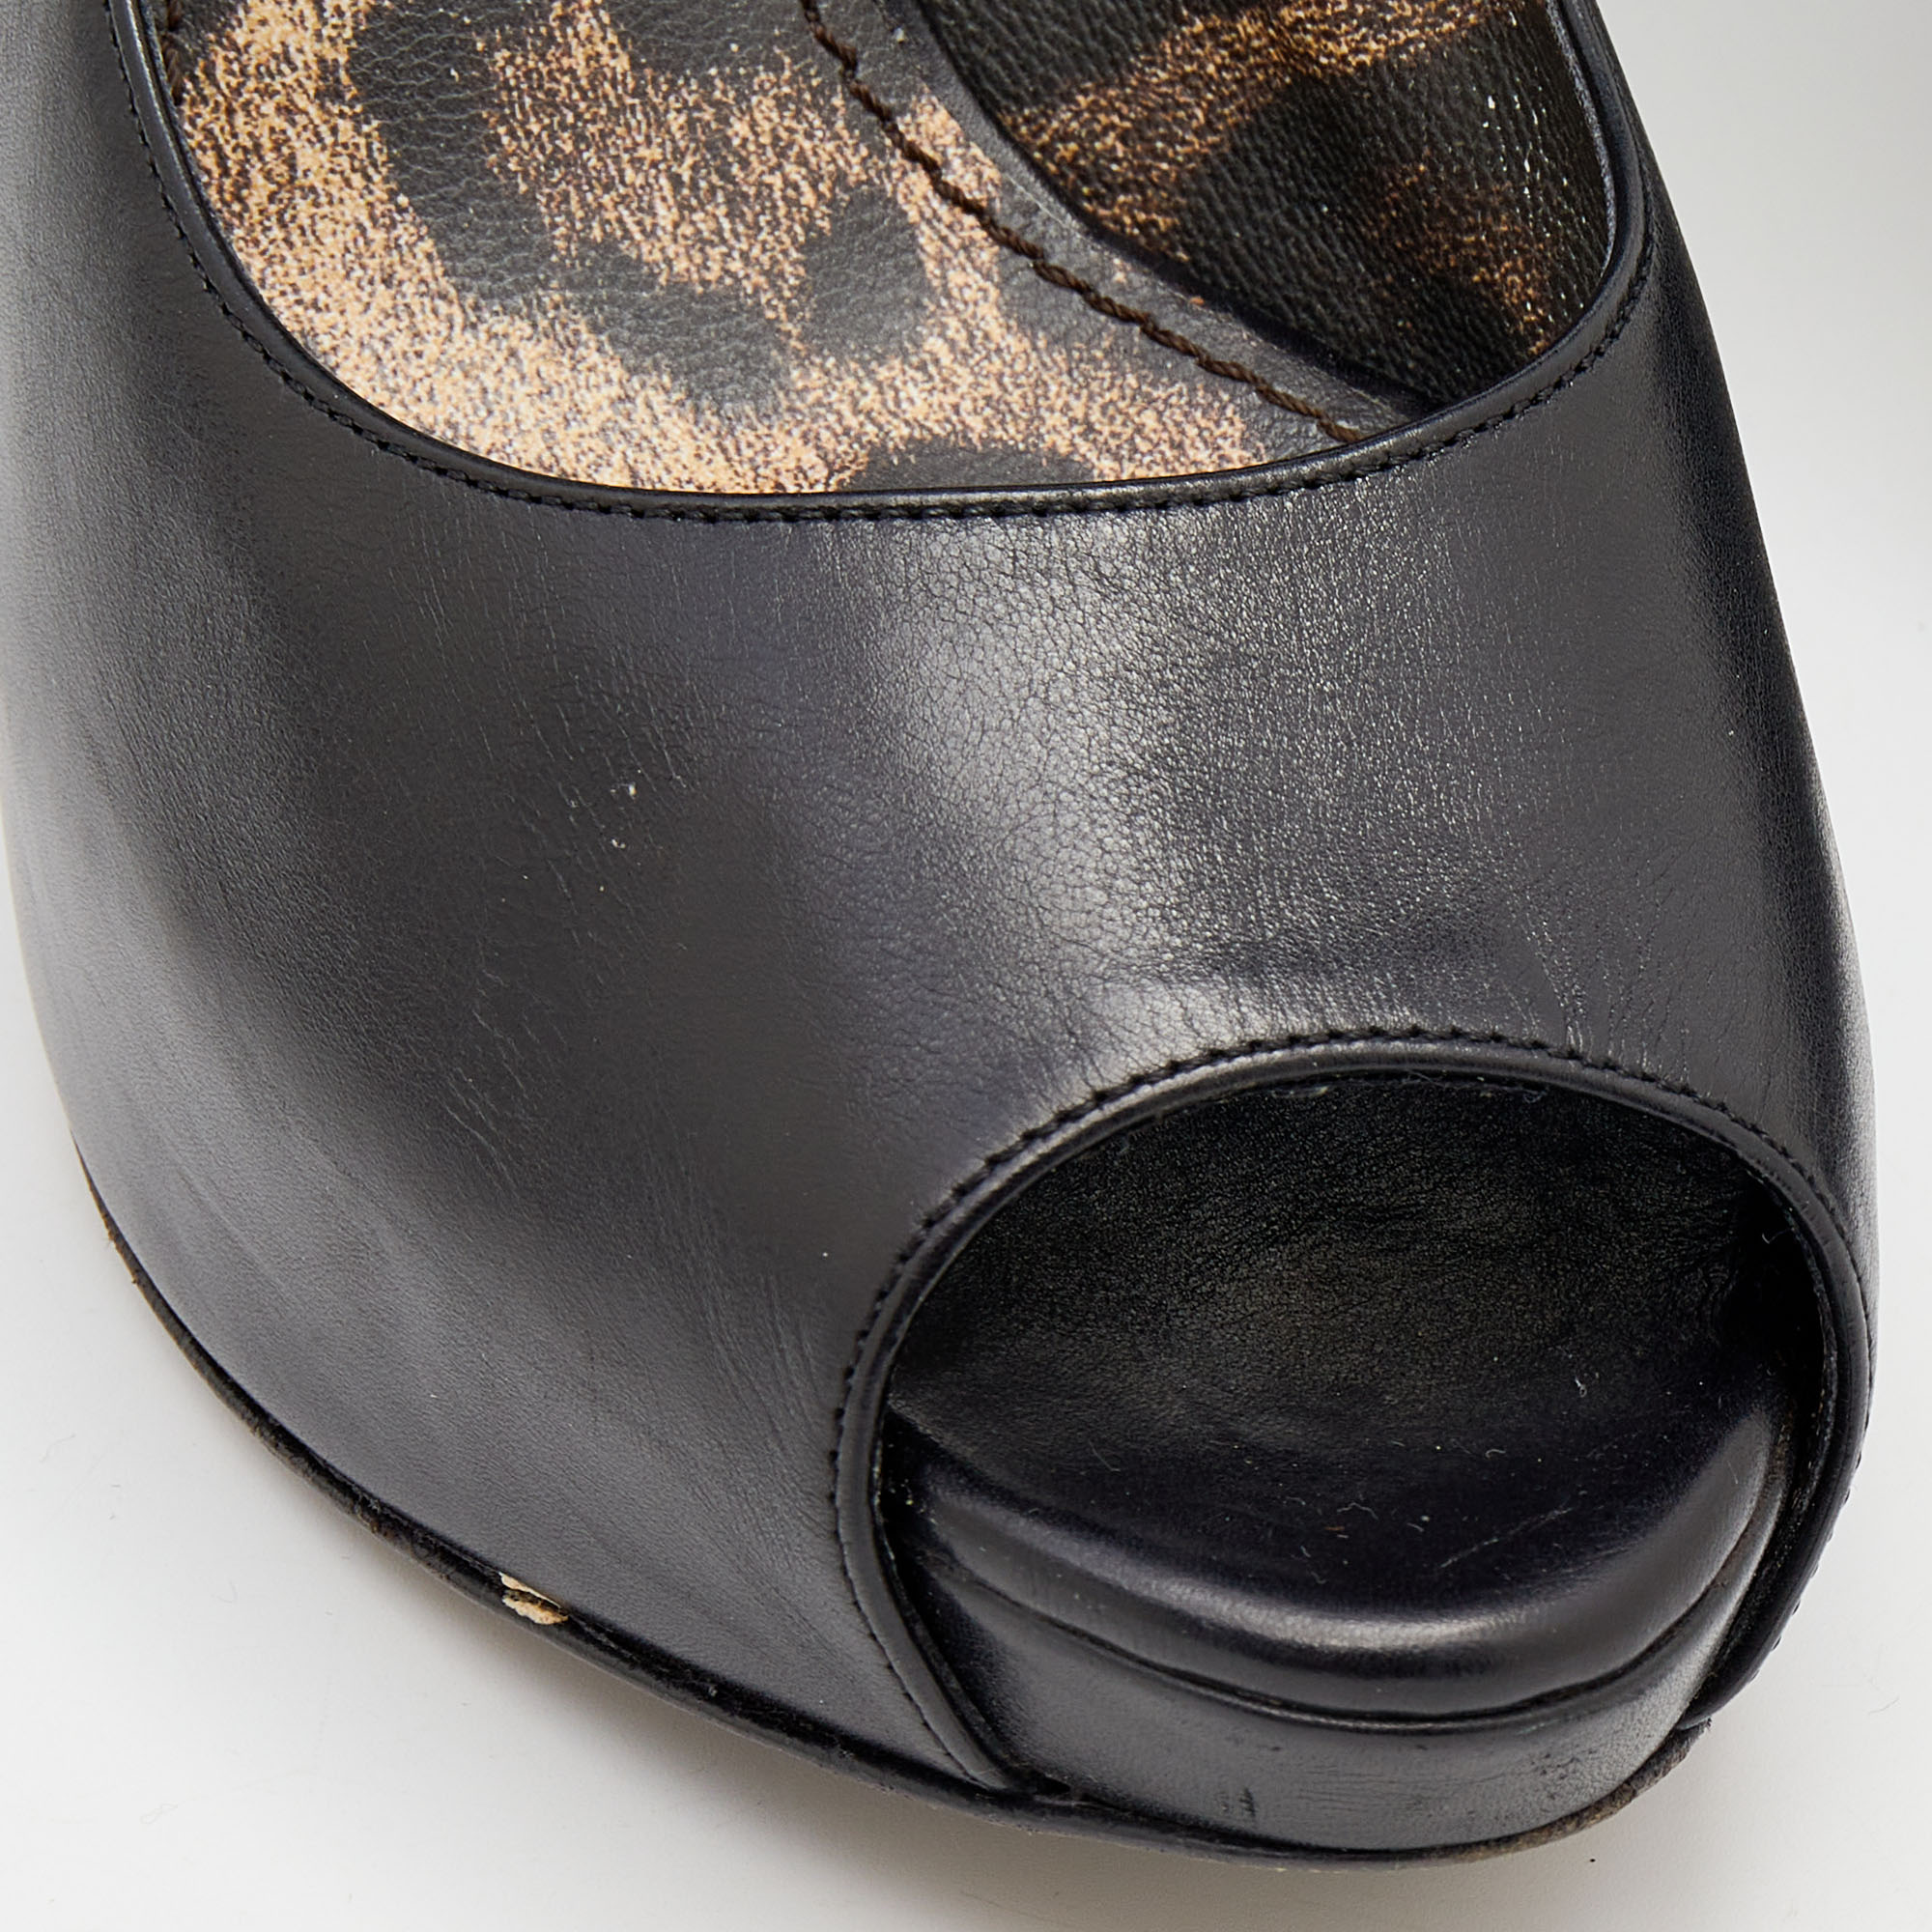 Dolce & Gabbana Black Leather Peep Toe Platform Pumps Size 38.5